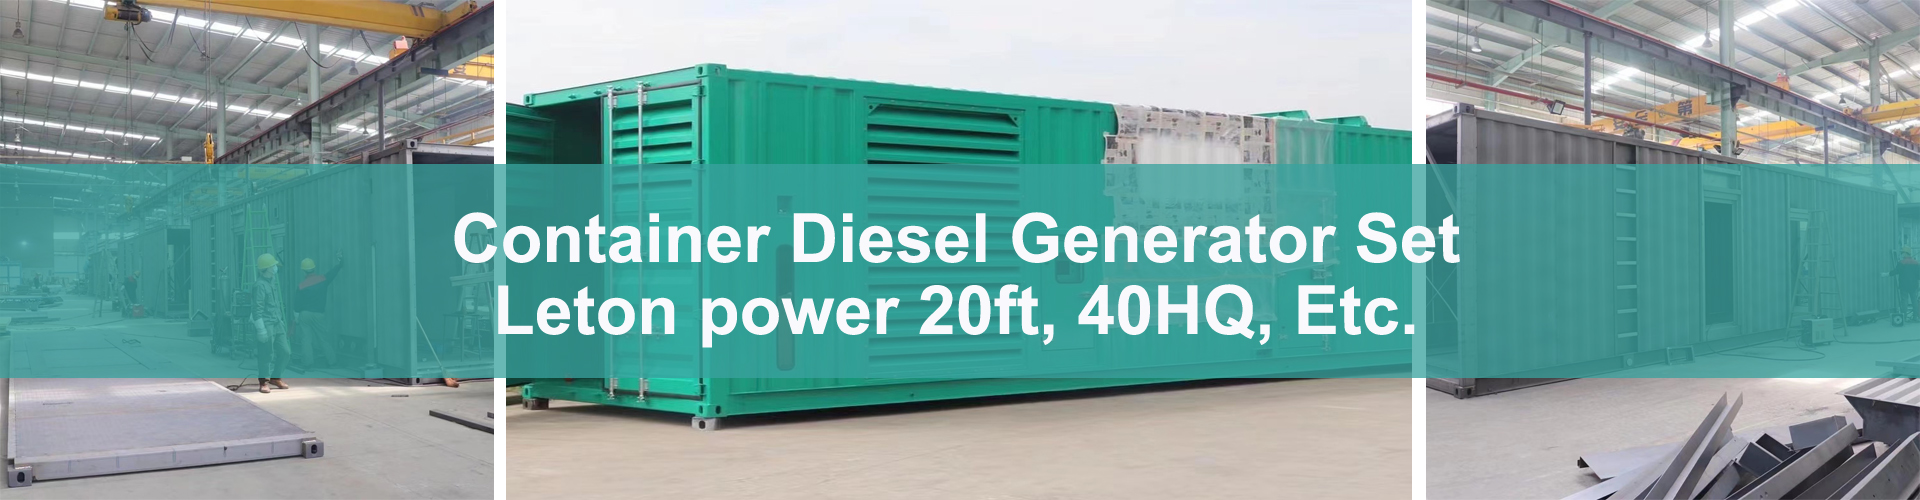 Container generator set power station diesel generator set 20ft 40HQ container power stationImage